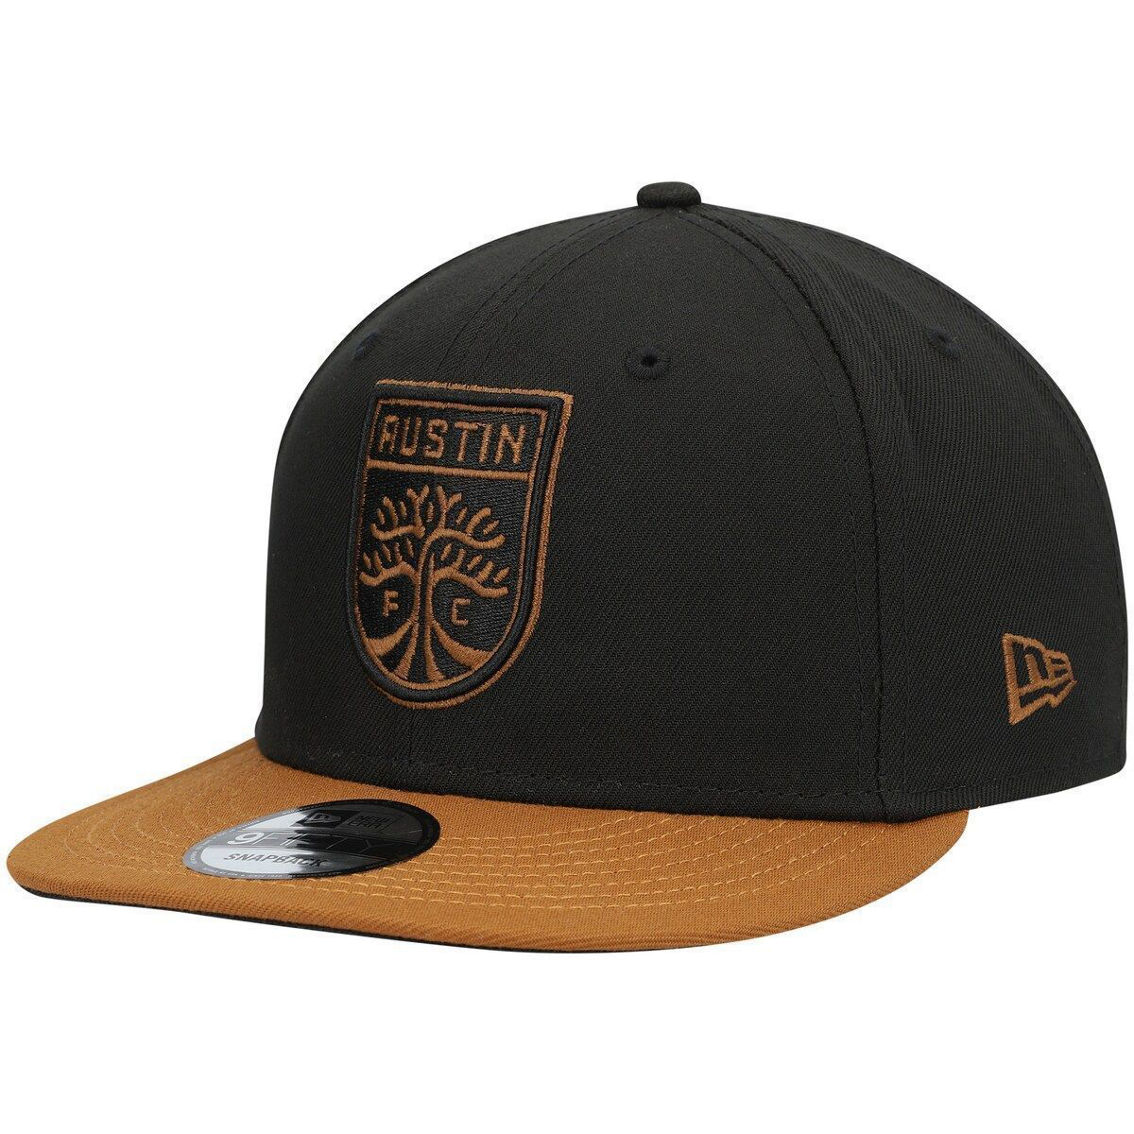 New Era Men's Black Austin FC Color Collection 9FIFTY Snapback Hat - Image 2 of 4